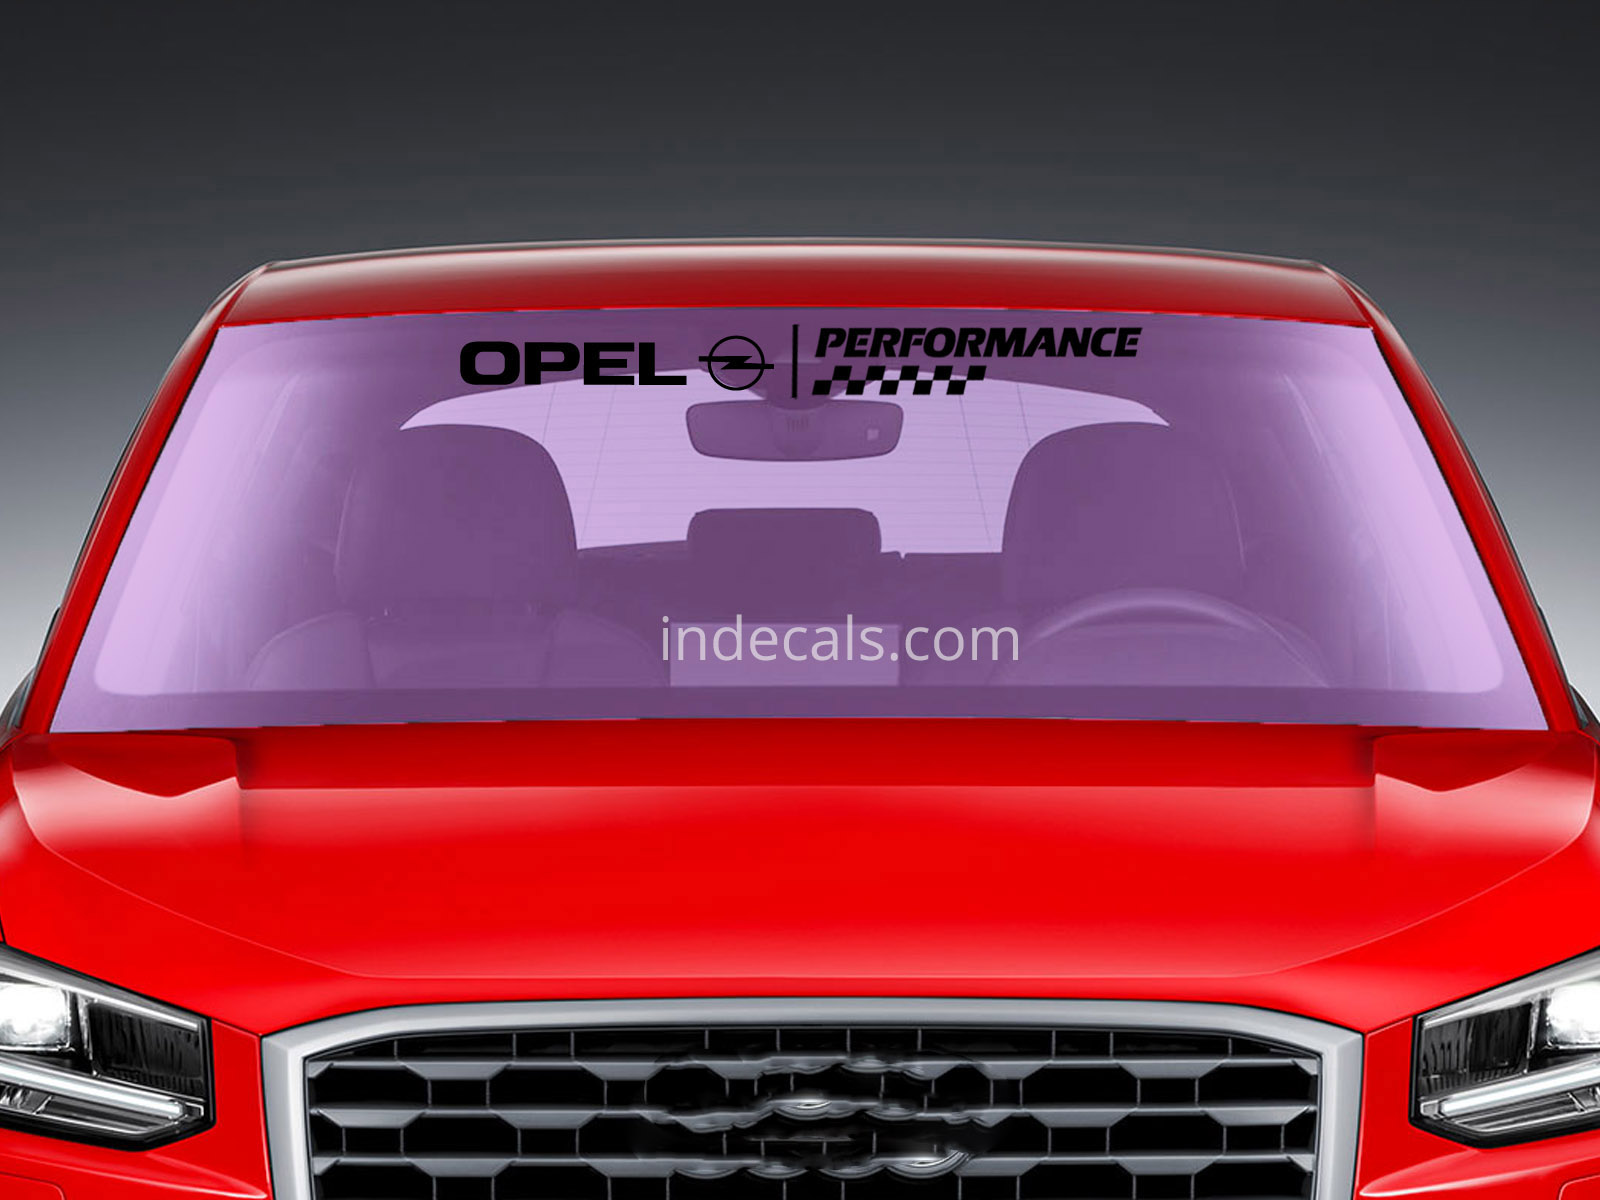 1 x Opel Performance Sticker for Windshield or Back Window - Black